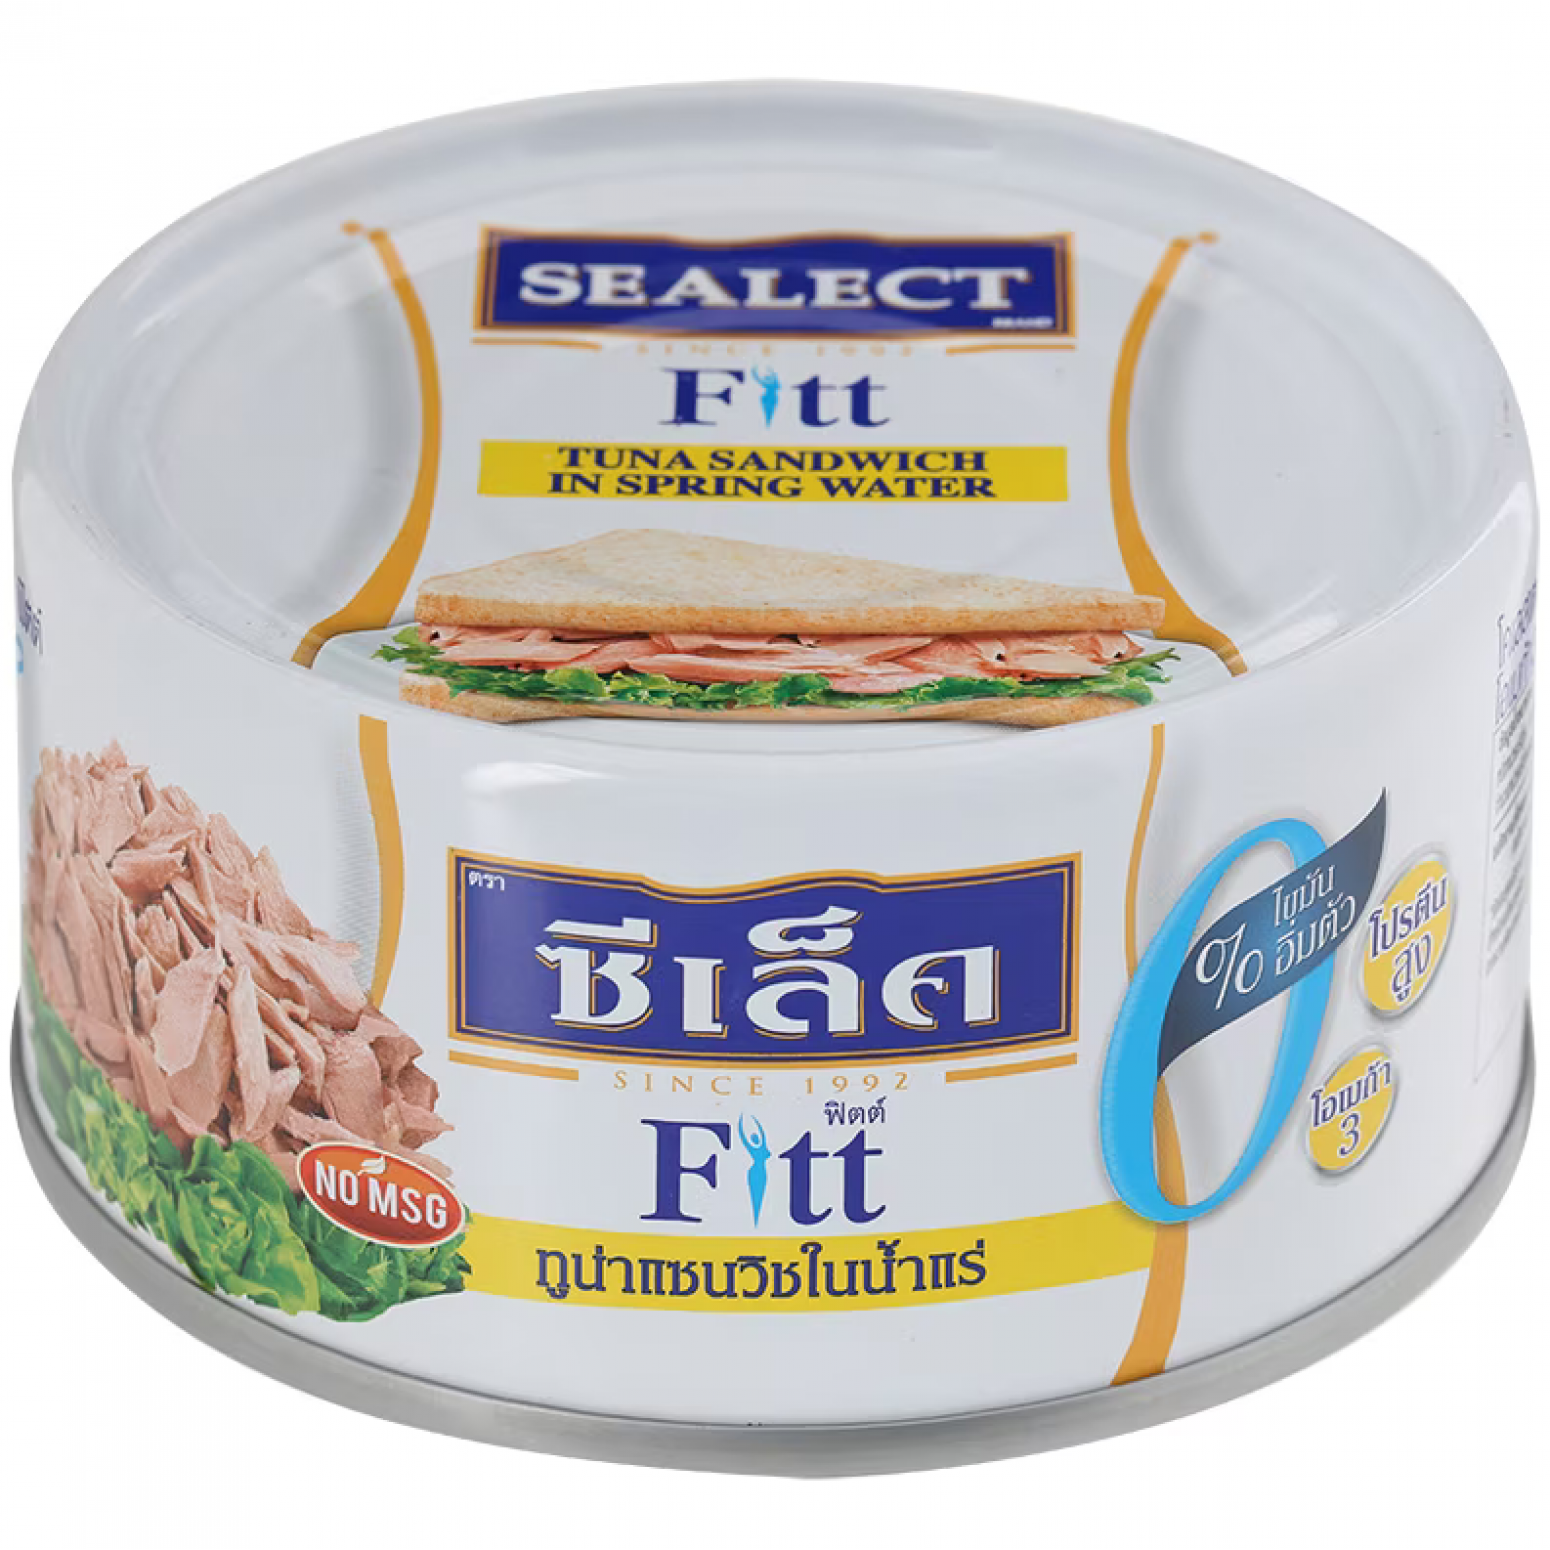 Sealect Fitt Tuna Sandwich in Spring Water 165g.